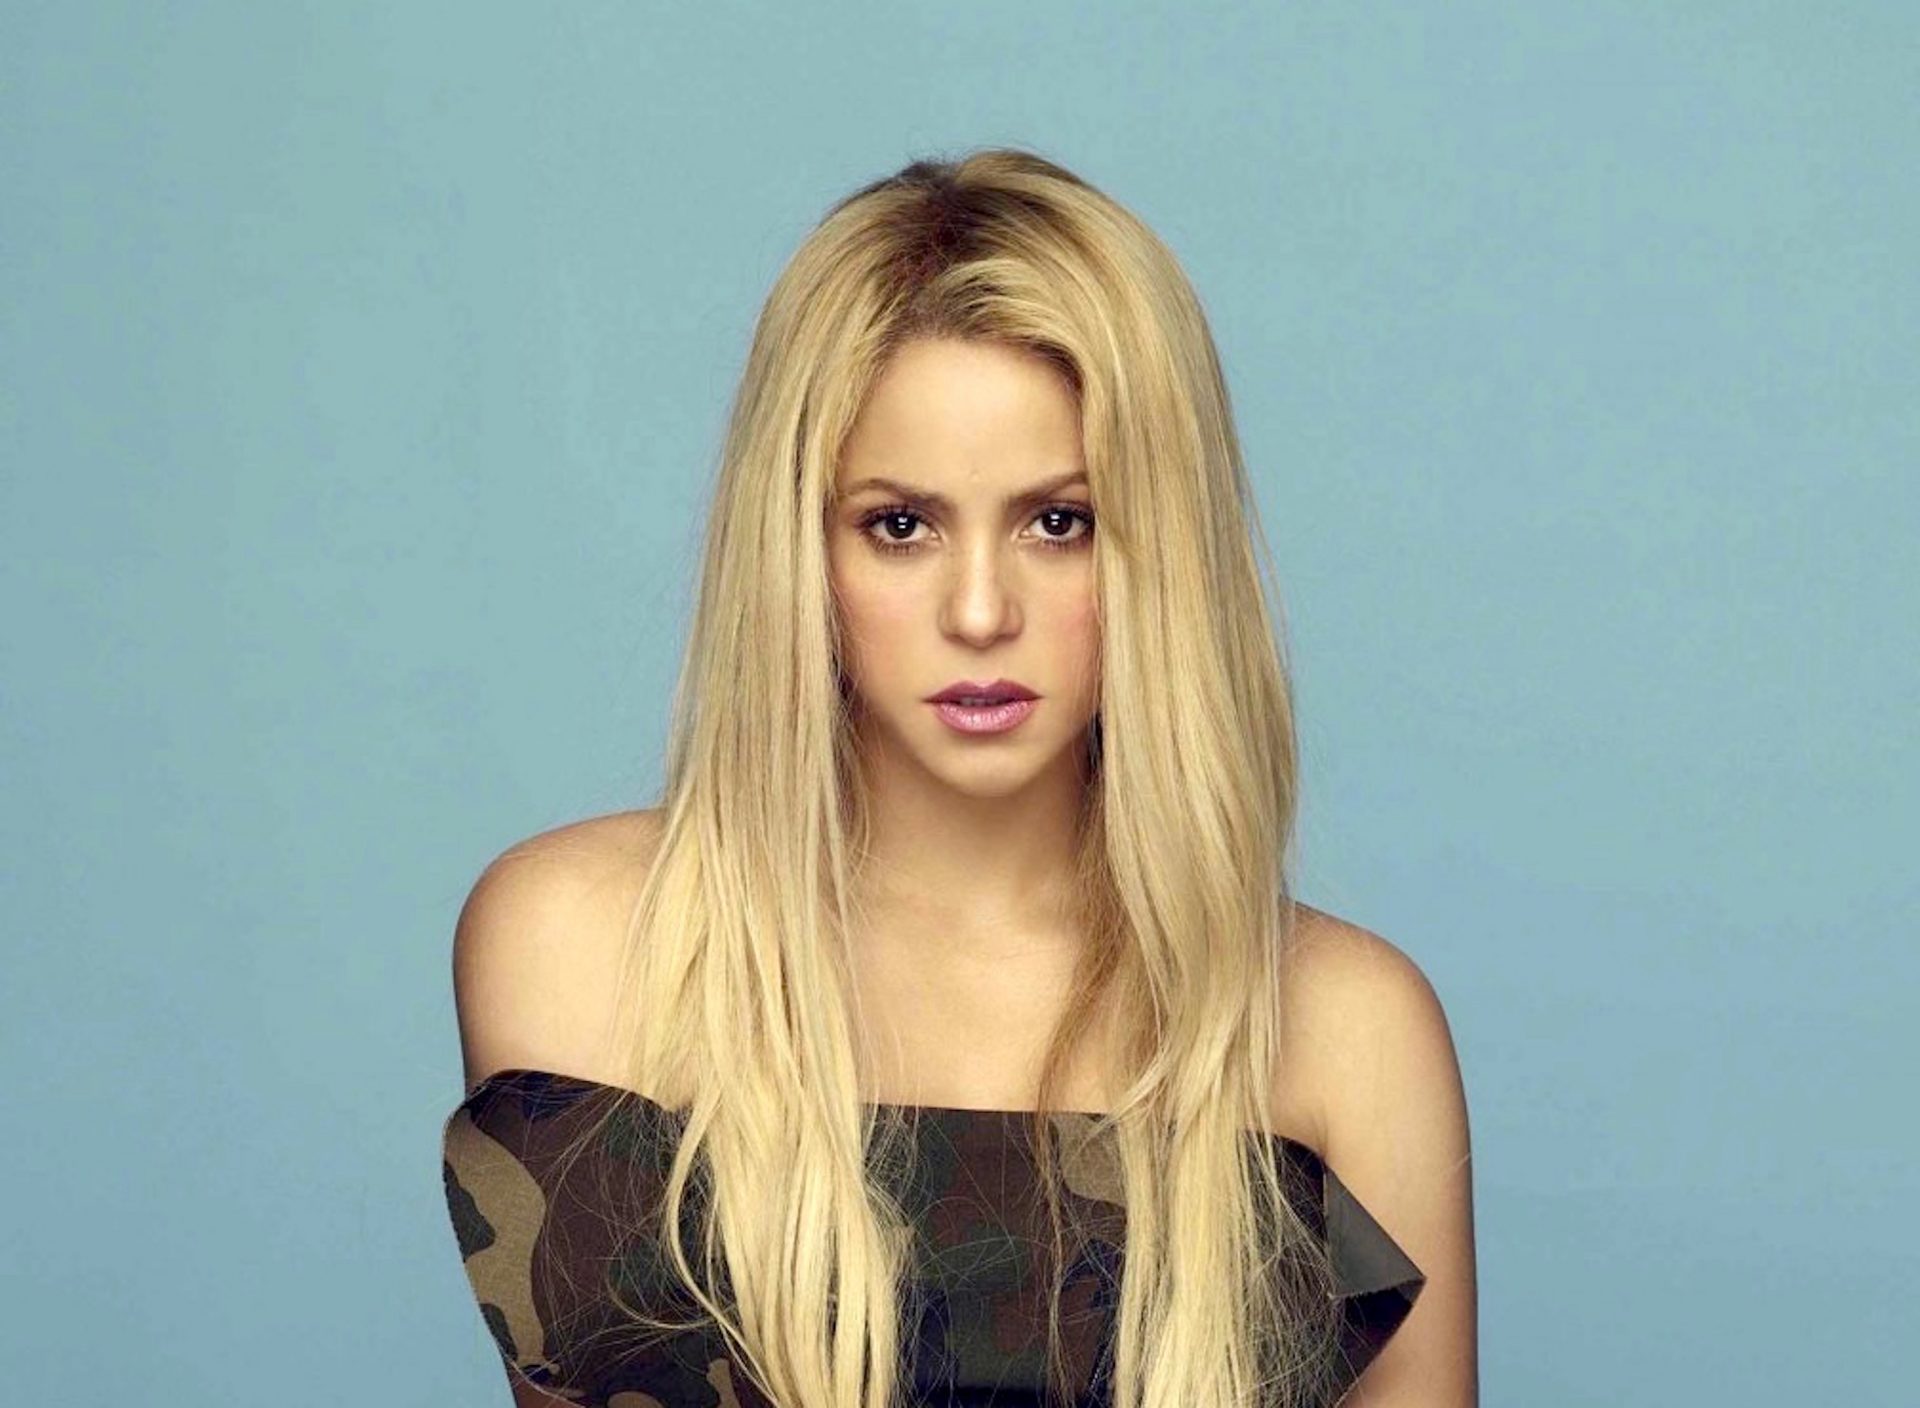 Shakira afirma que sus empresas son legales